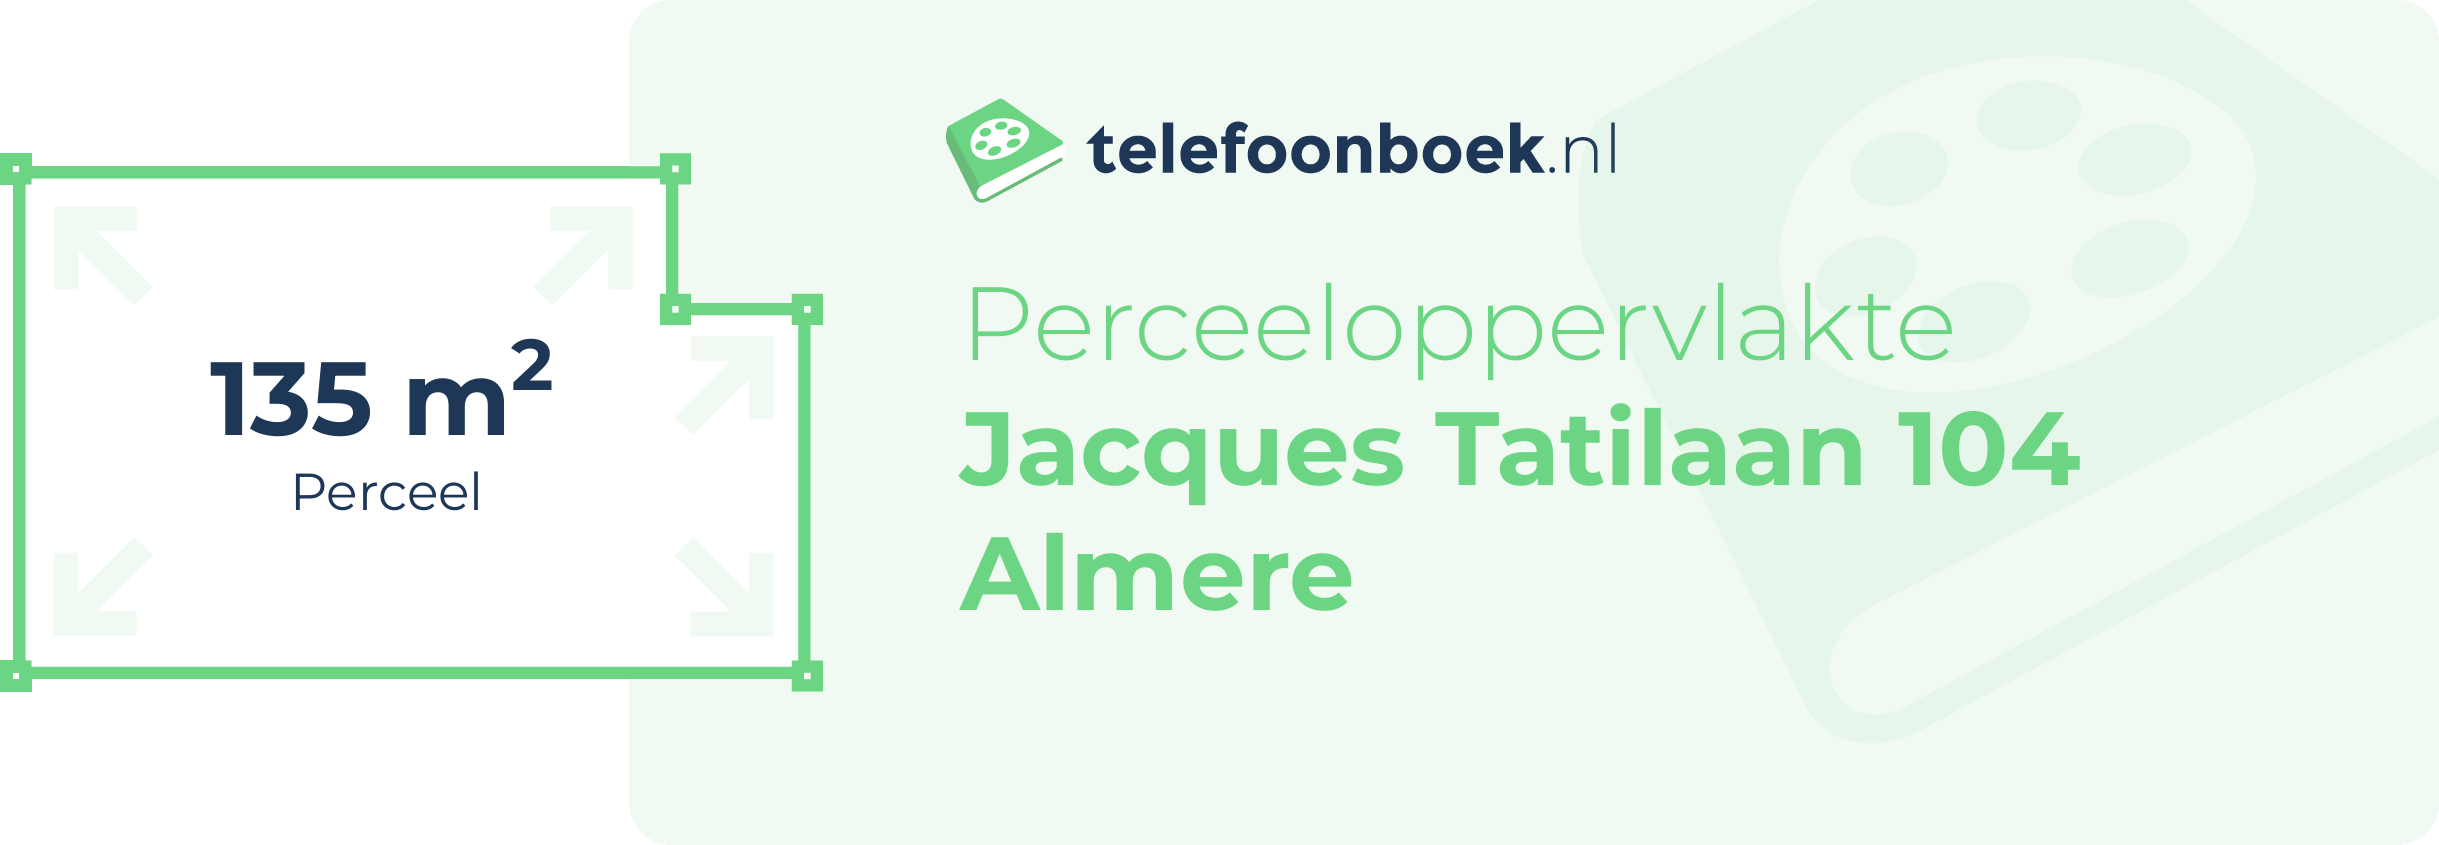 Perceeloppervlakte Jacques Tatilaan 104 Almere